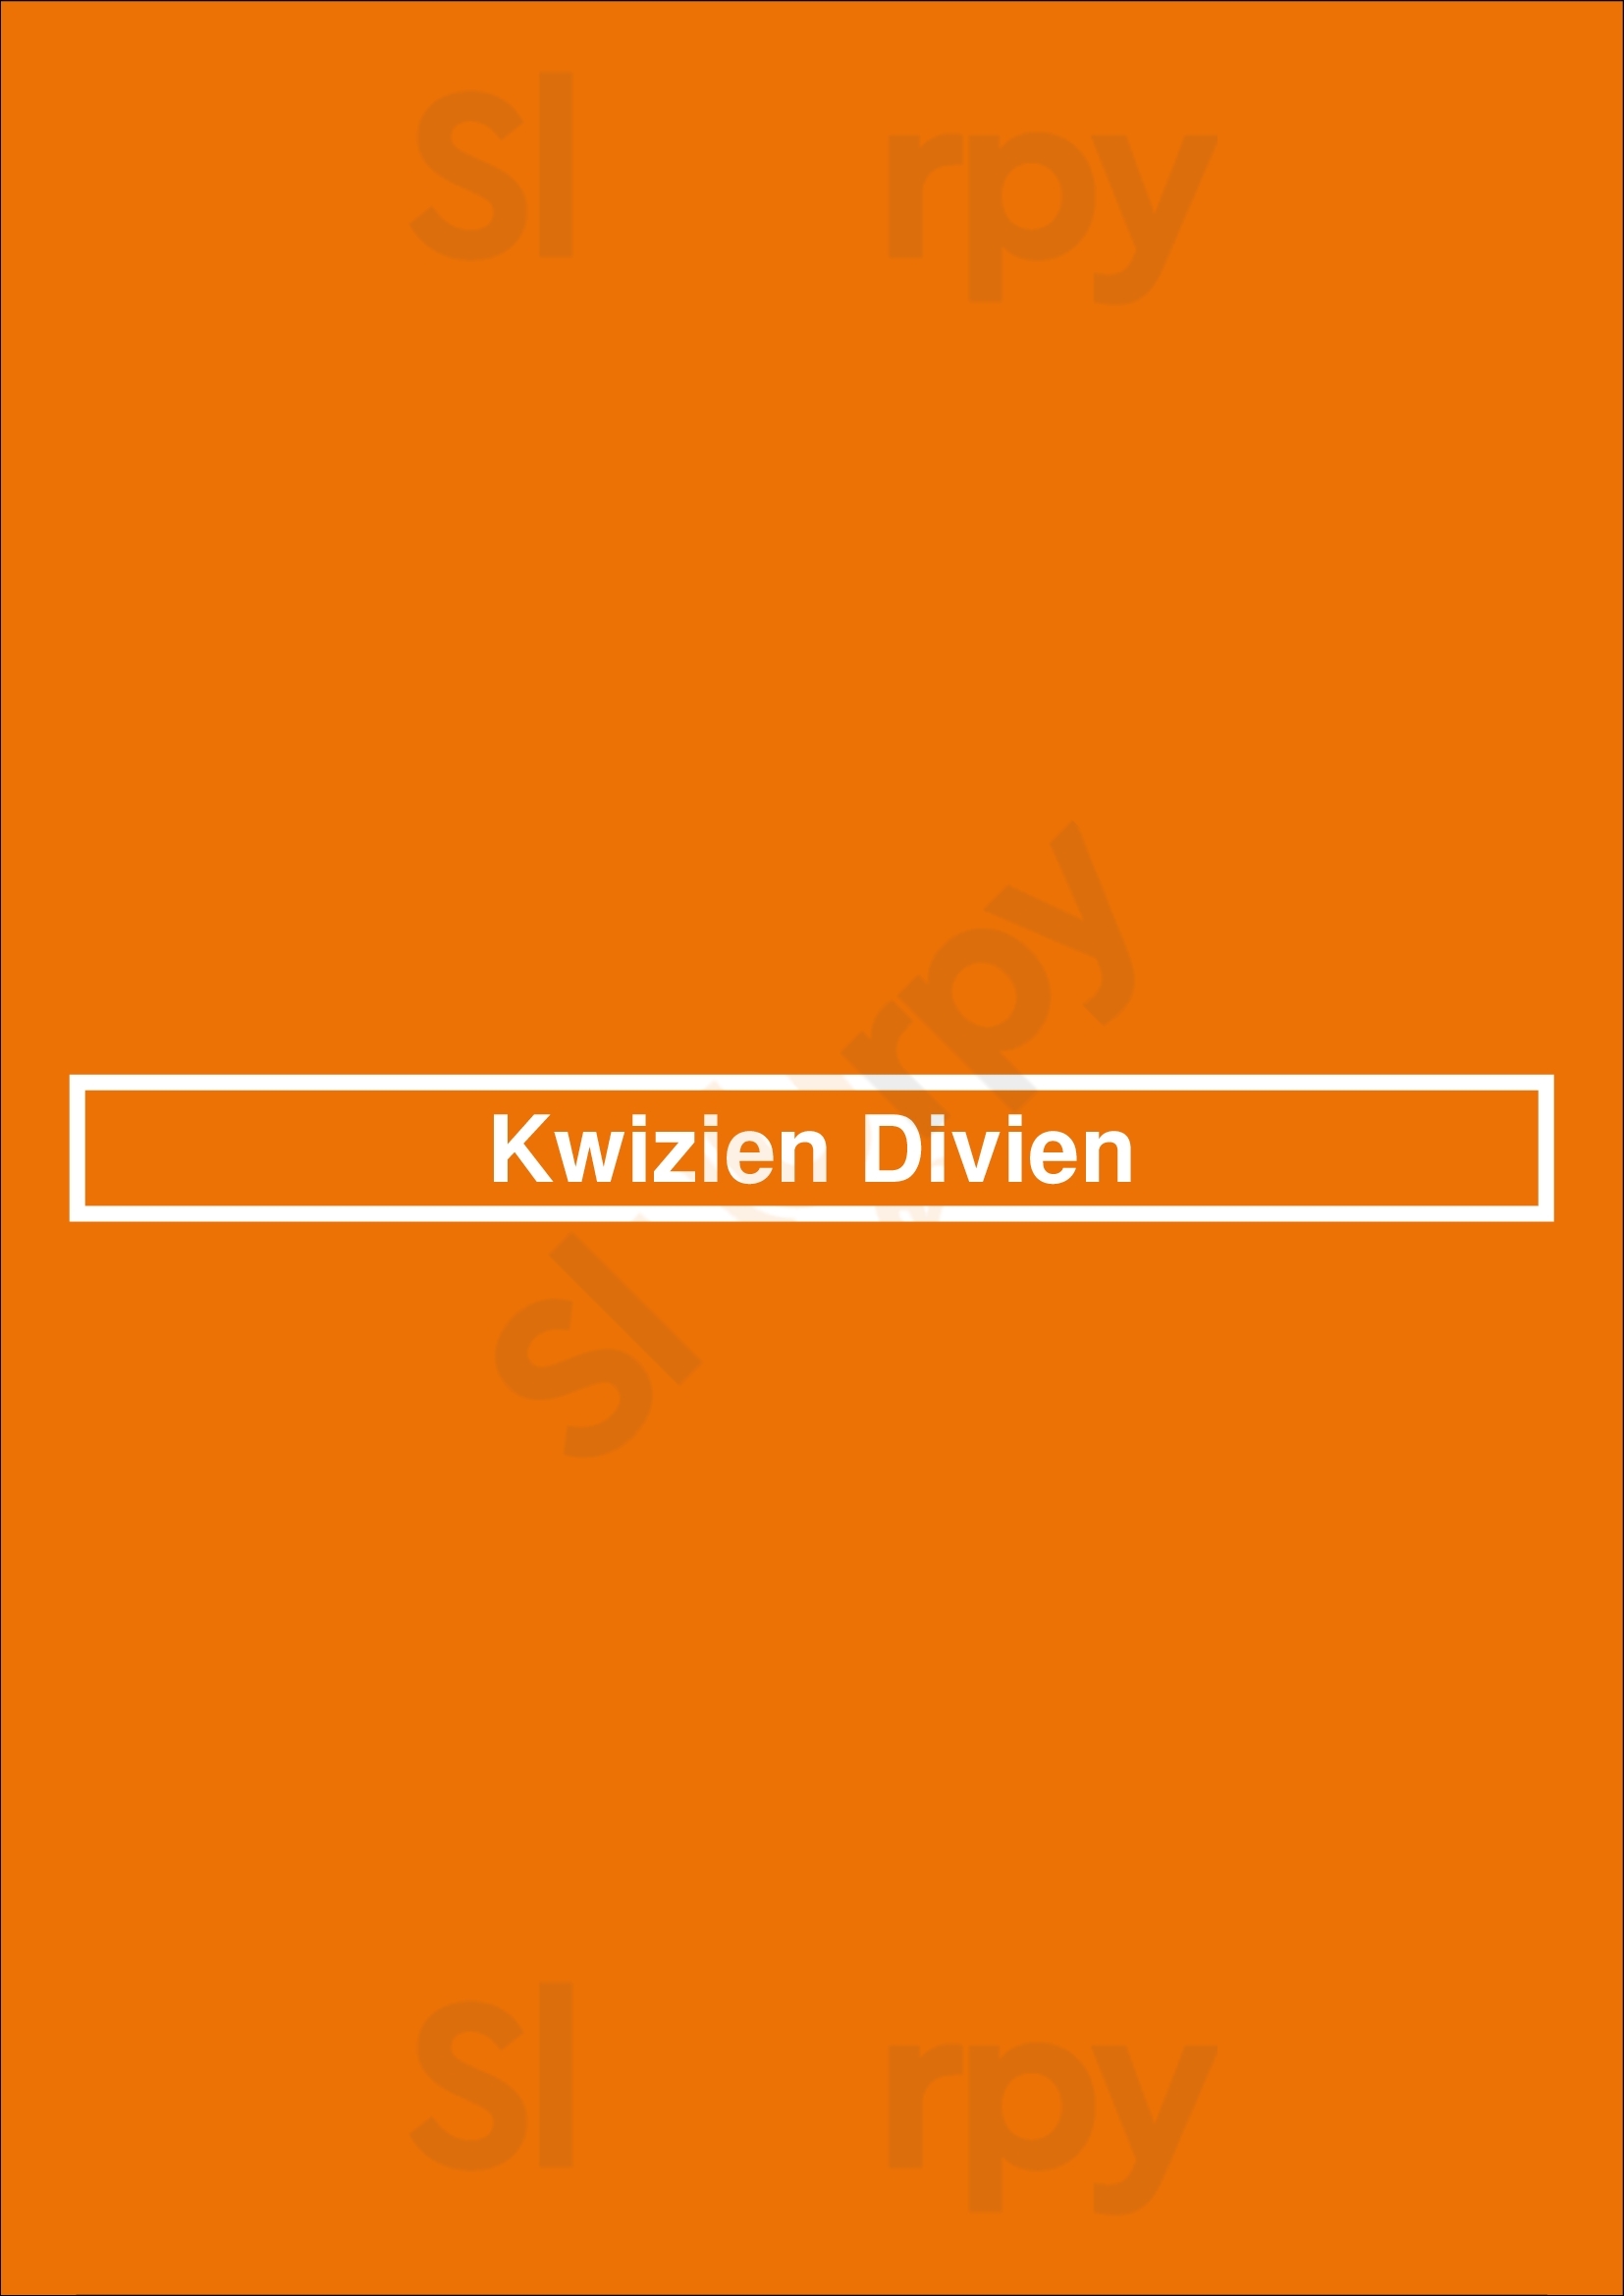 Trattoria Kwizien Divien Bruges Menu - 1